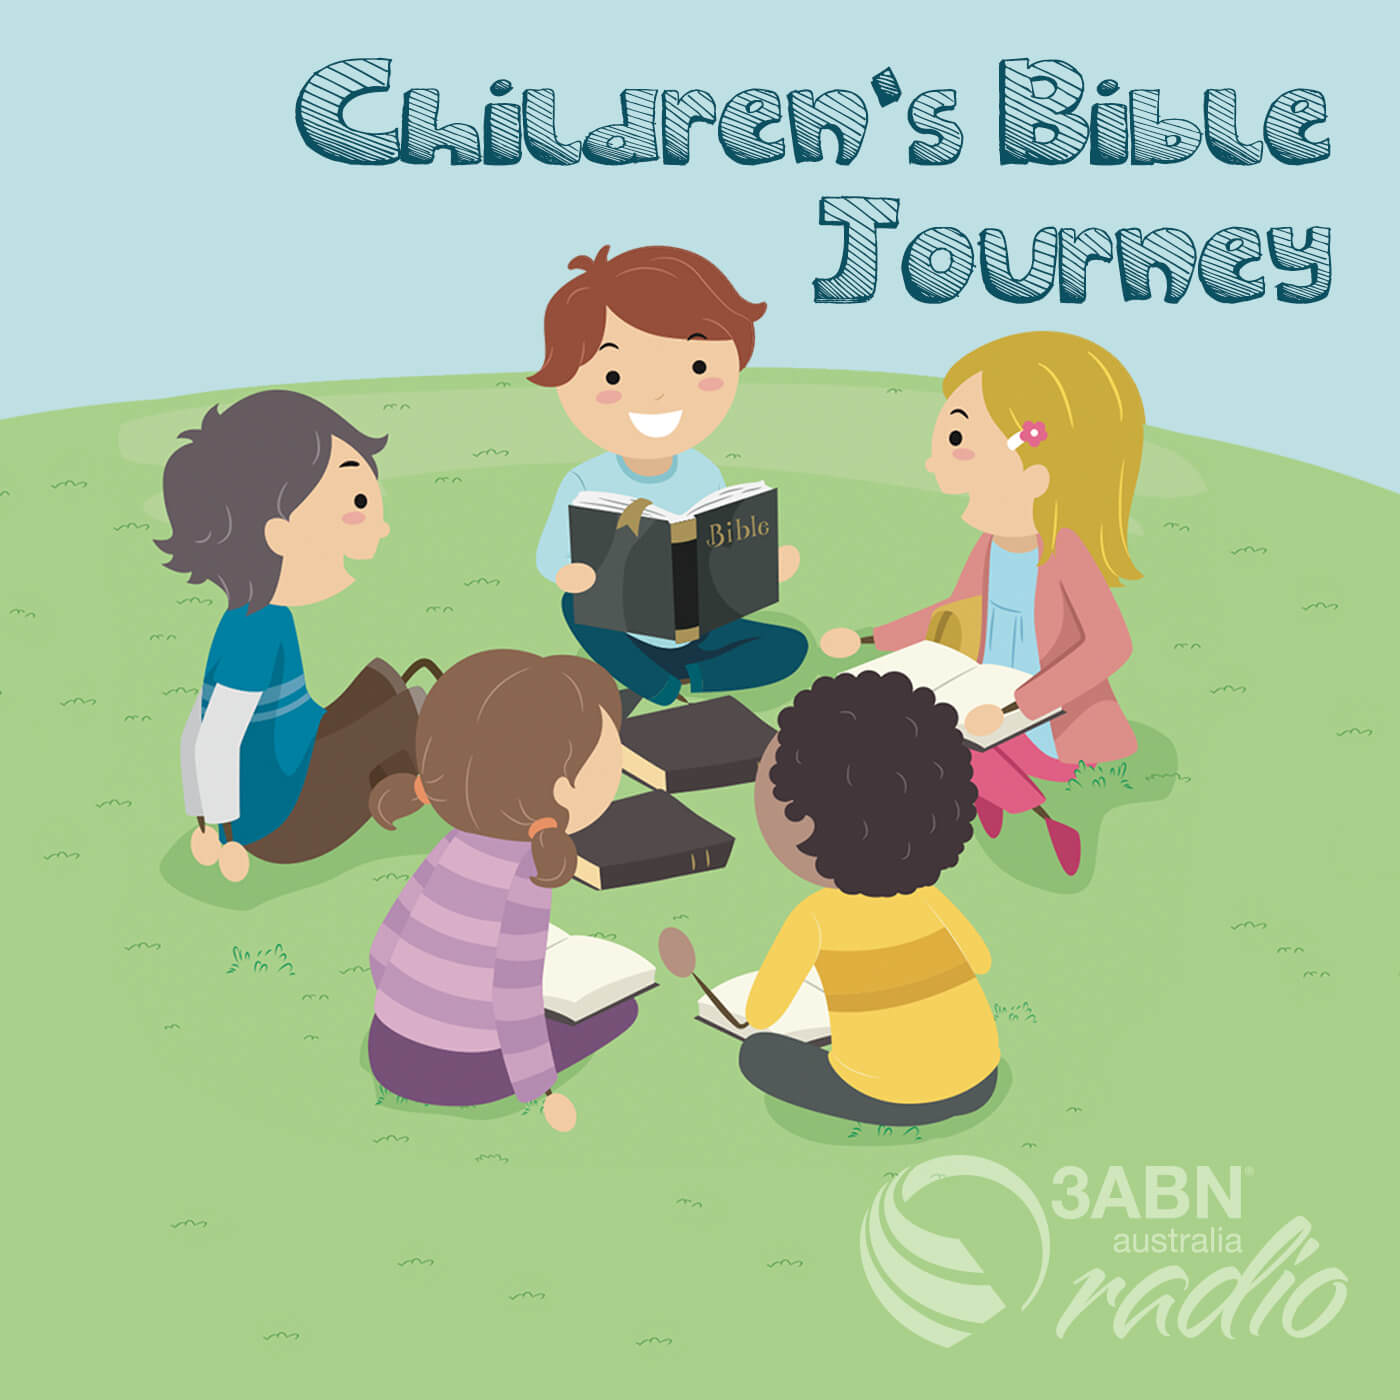 Children's Bible Journey - 2191